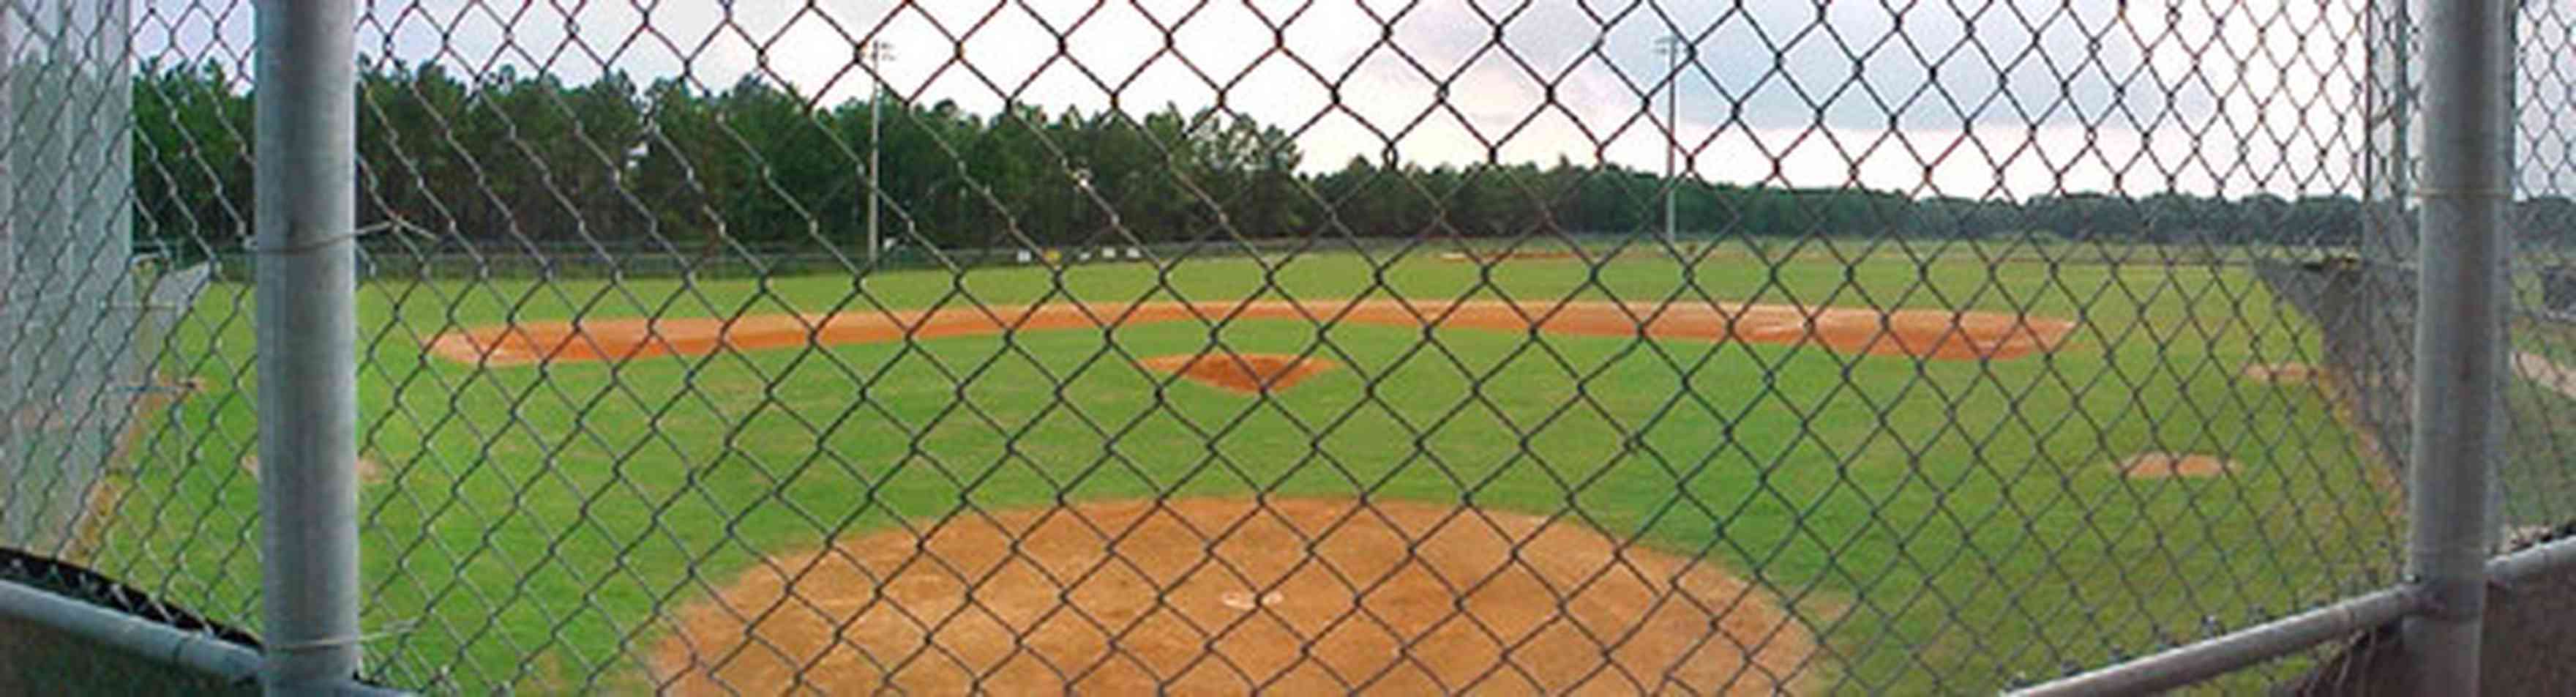 Ensley:-JR-Jones-Ballfield_05.jpg:  baseball diamond, baseball field, park